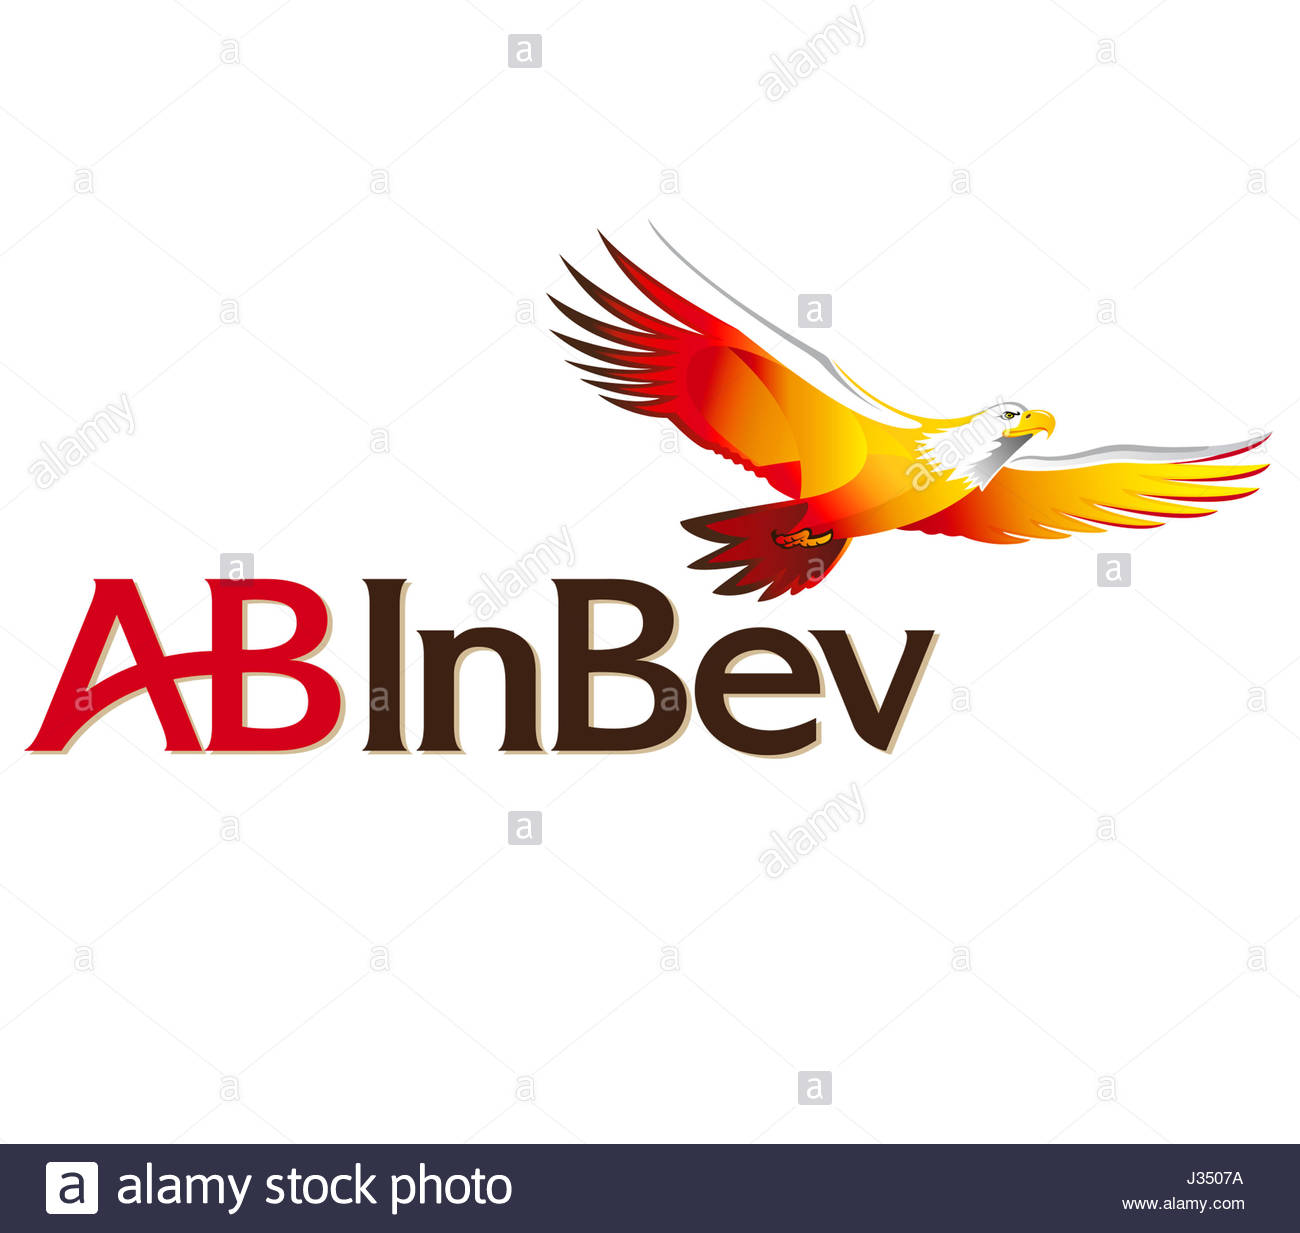 Anheuser Busch Inbev Icon Logo Sab Miller Brewery Stock Photo Alamy